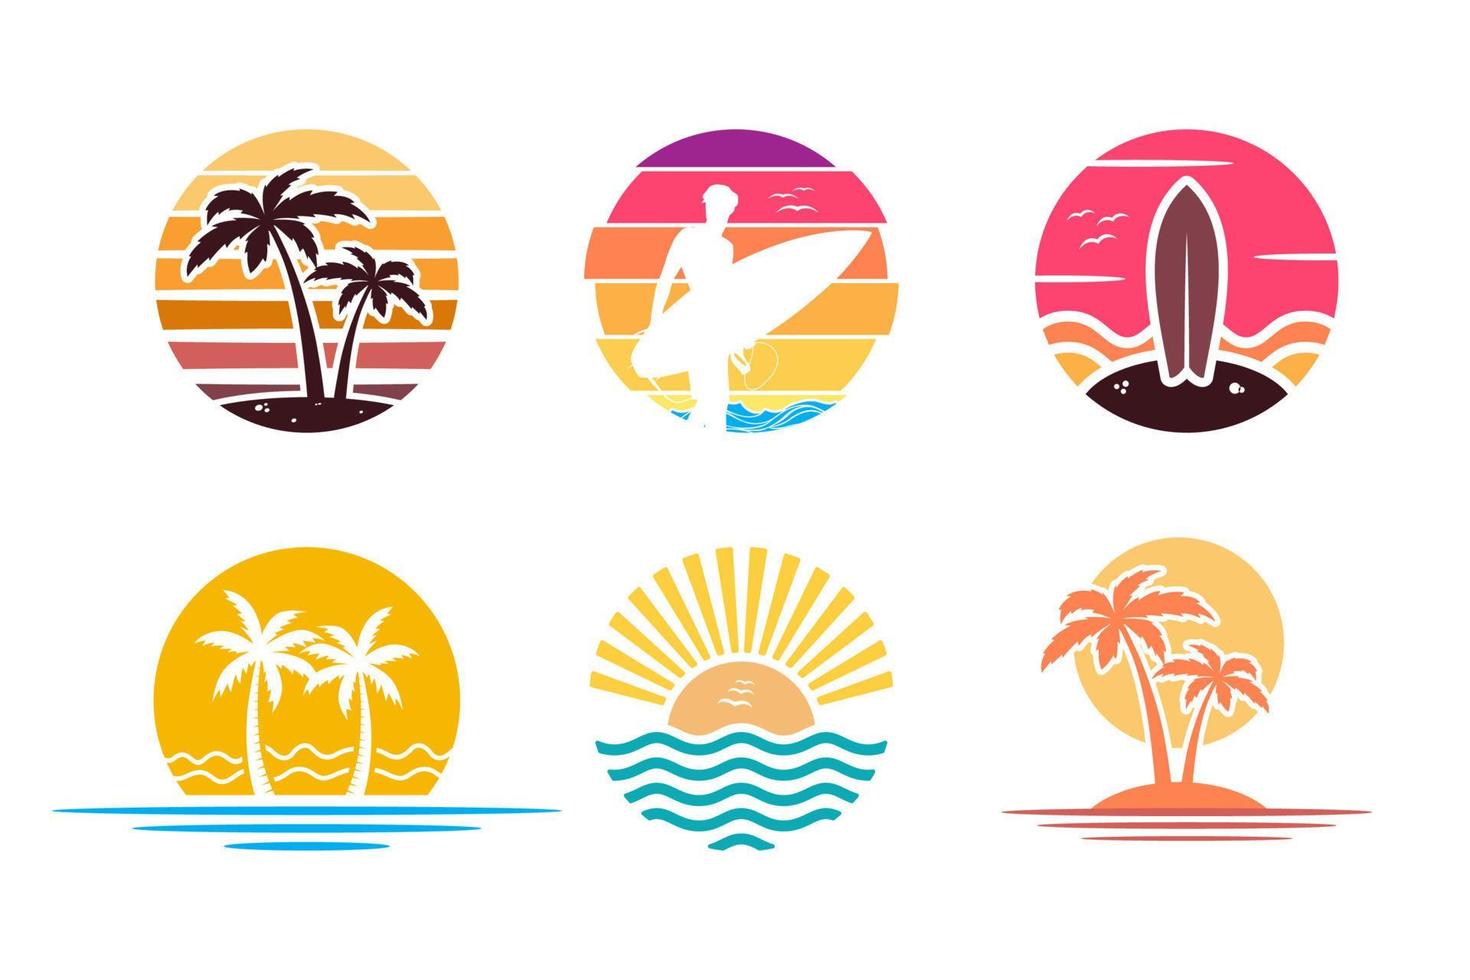 zomervakantie en surf logo collectie set vector